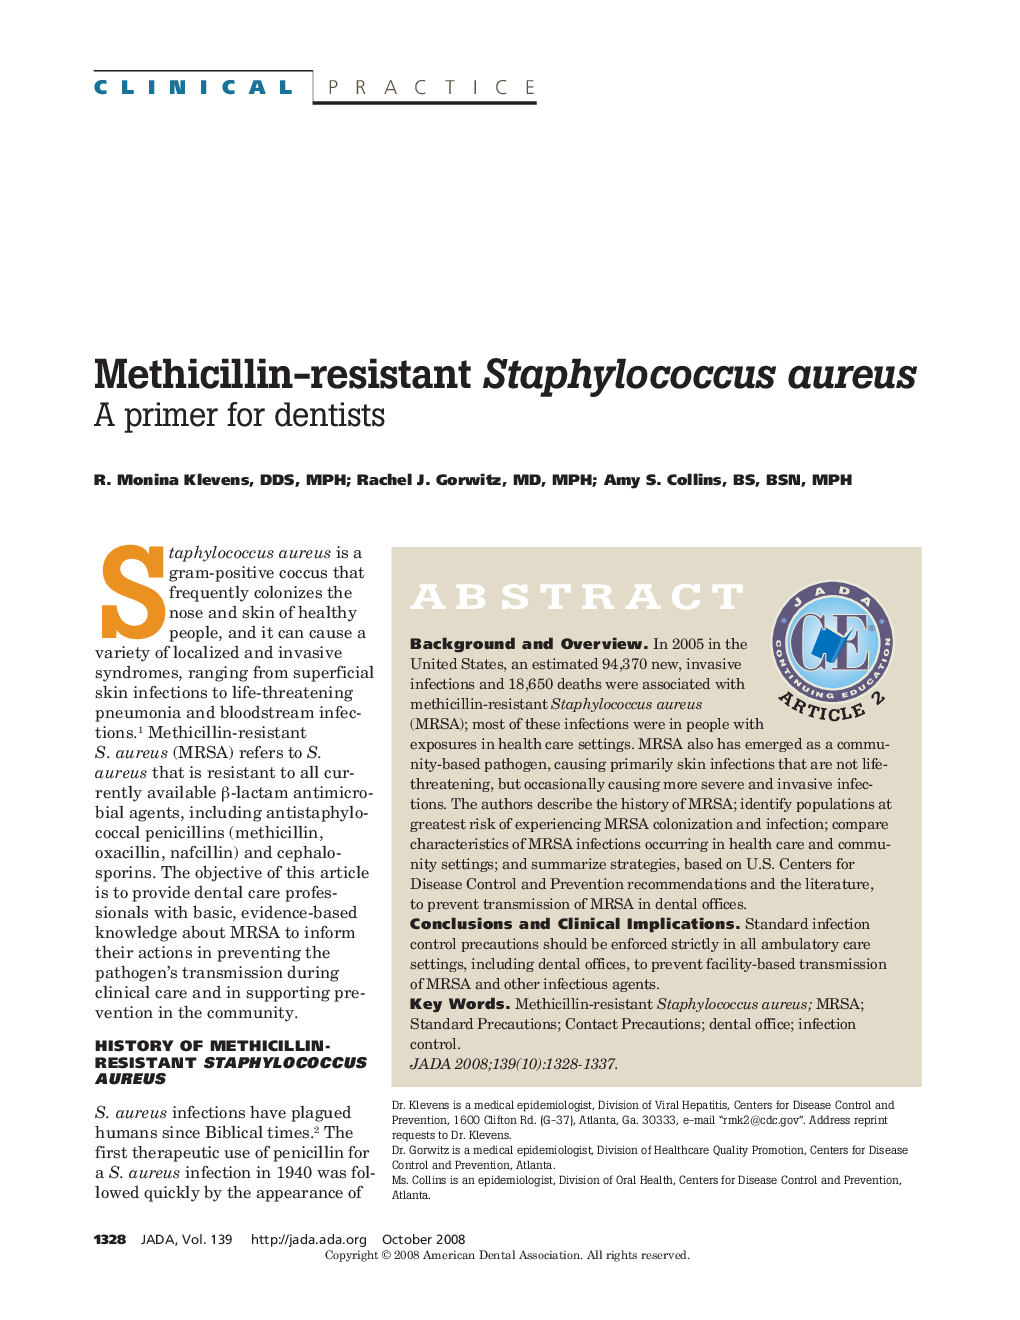 Methicillin-Resistant Staphylococcus aureus : A Primer for Dentists